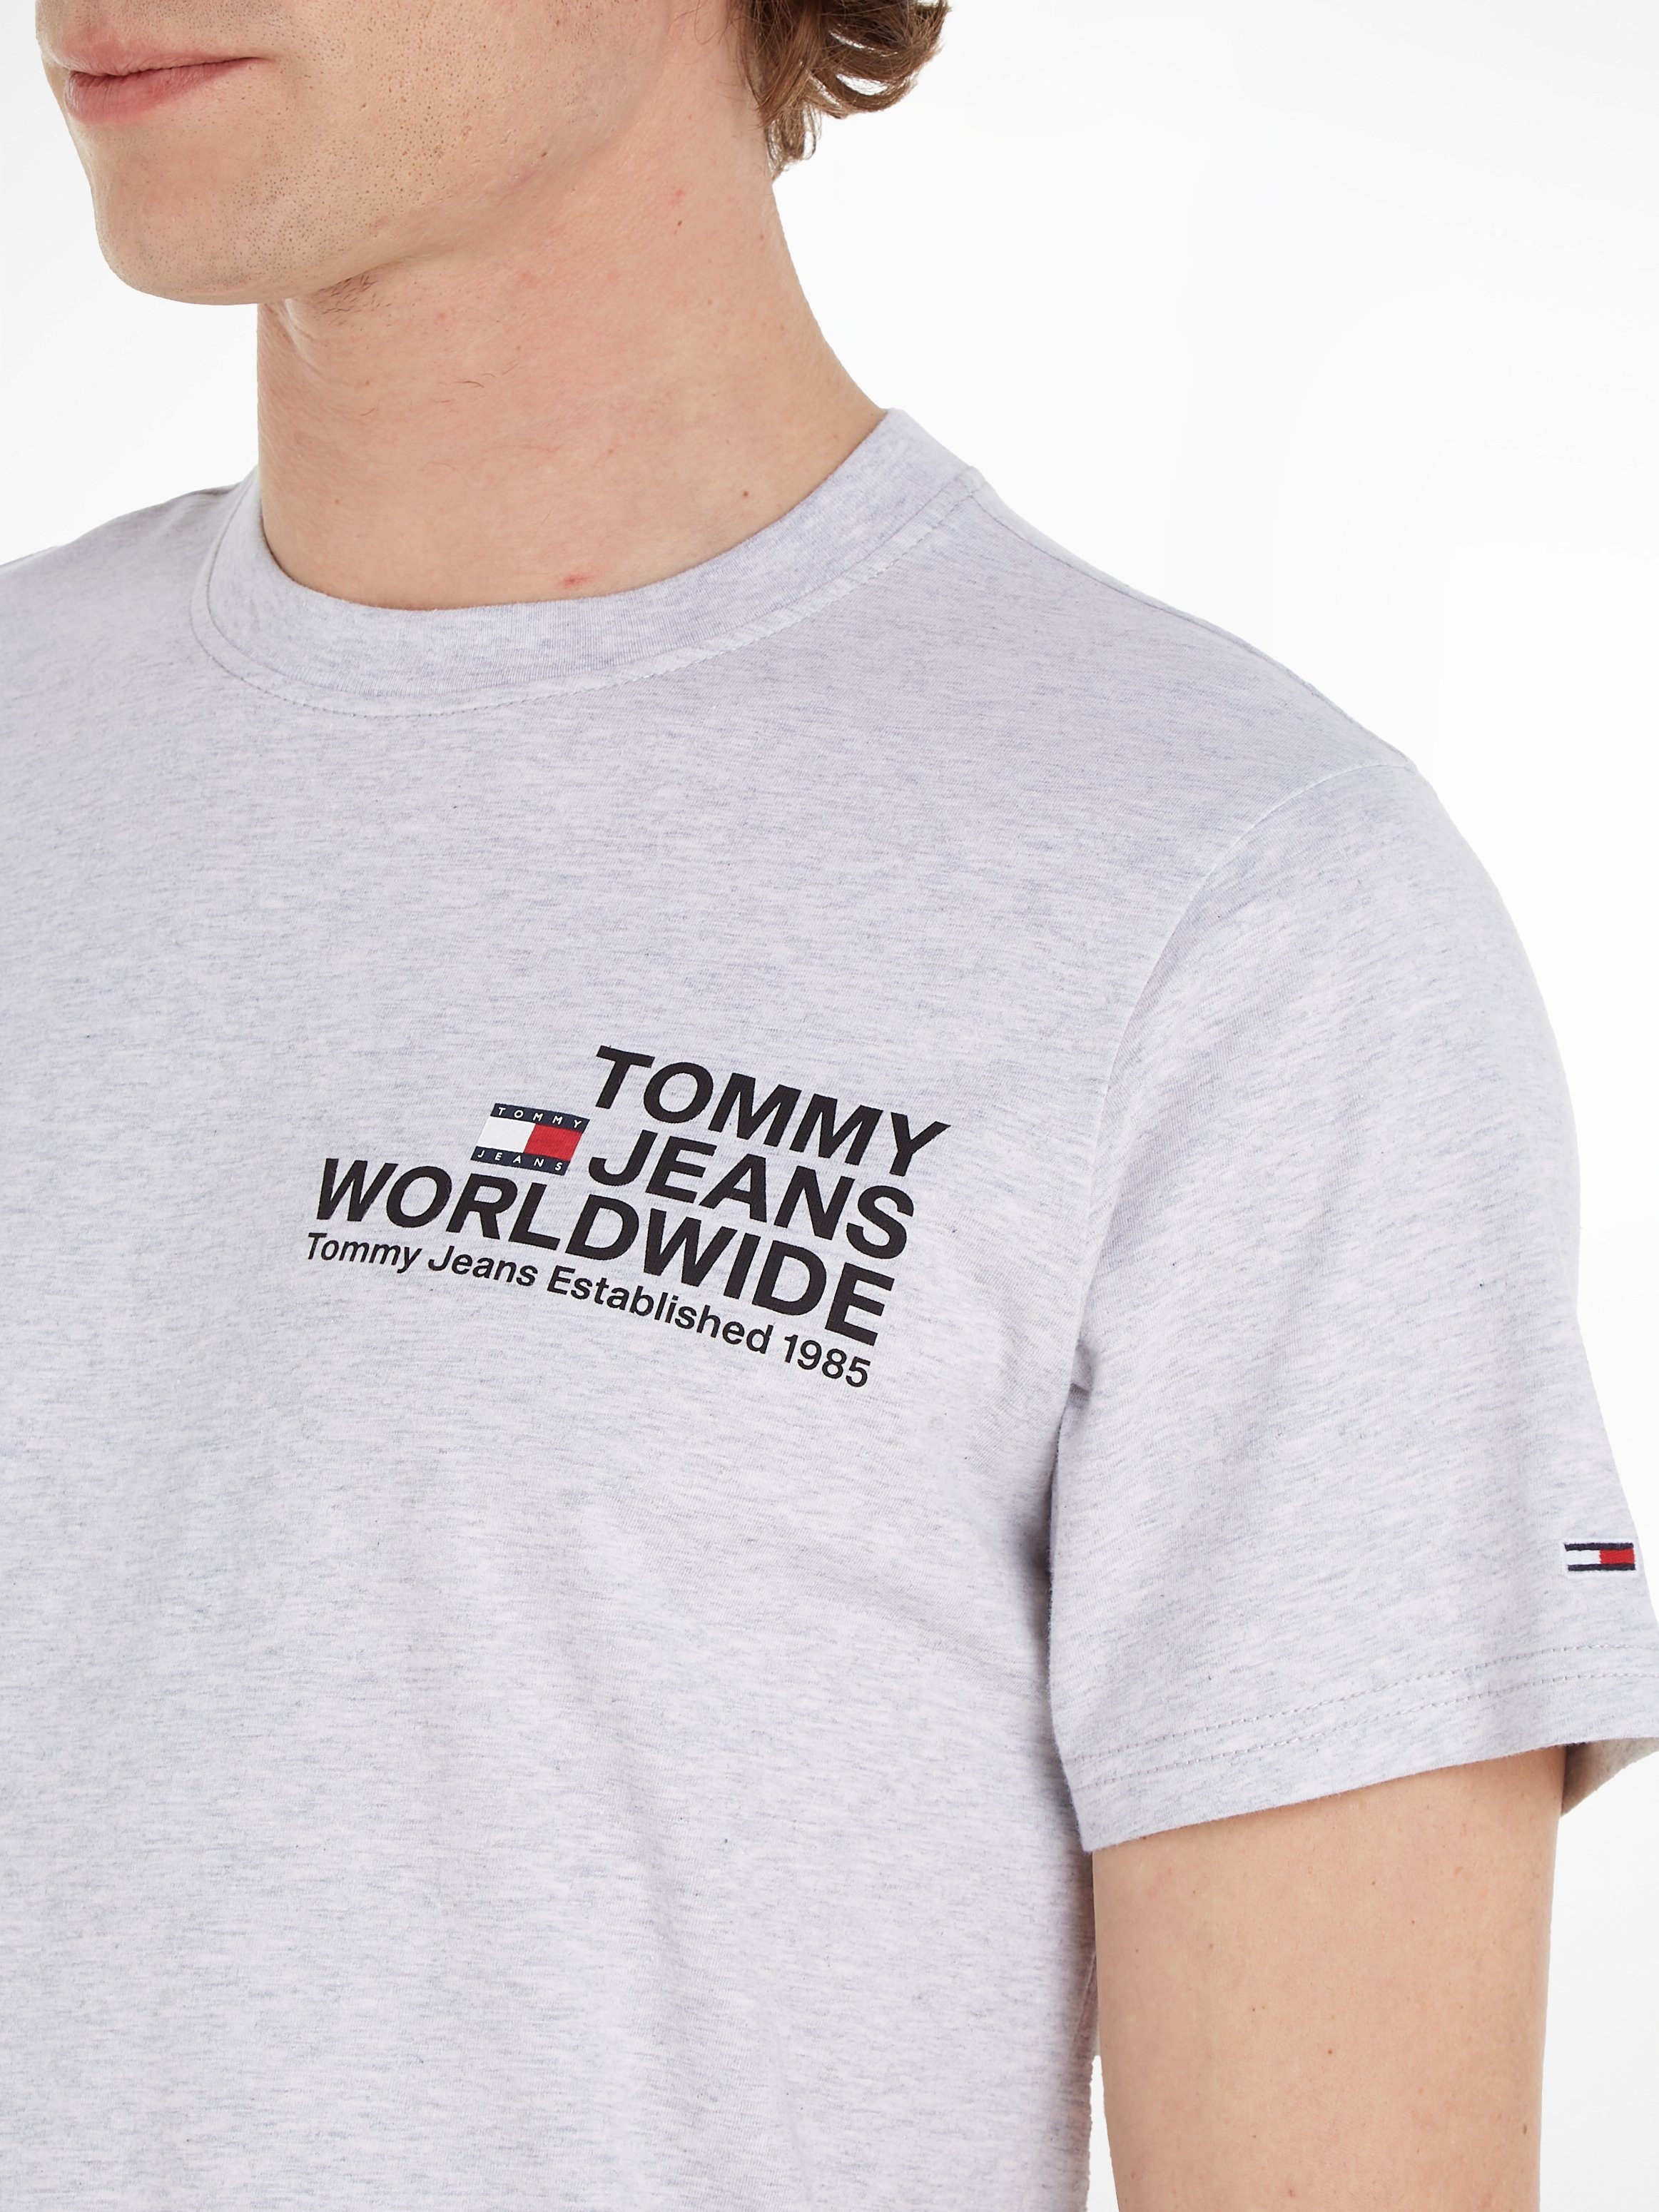 REG TJ Grey TJM Htr T-Shirt TEE CONCERT WW Tommy Silver Jeans ENTRY